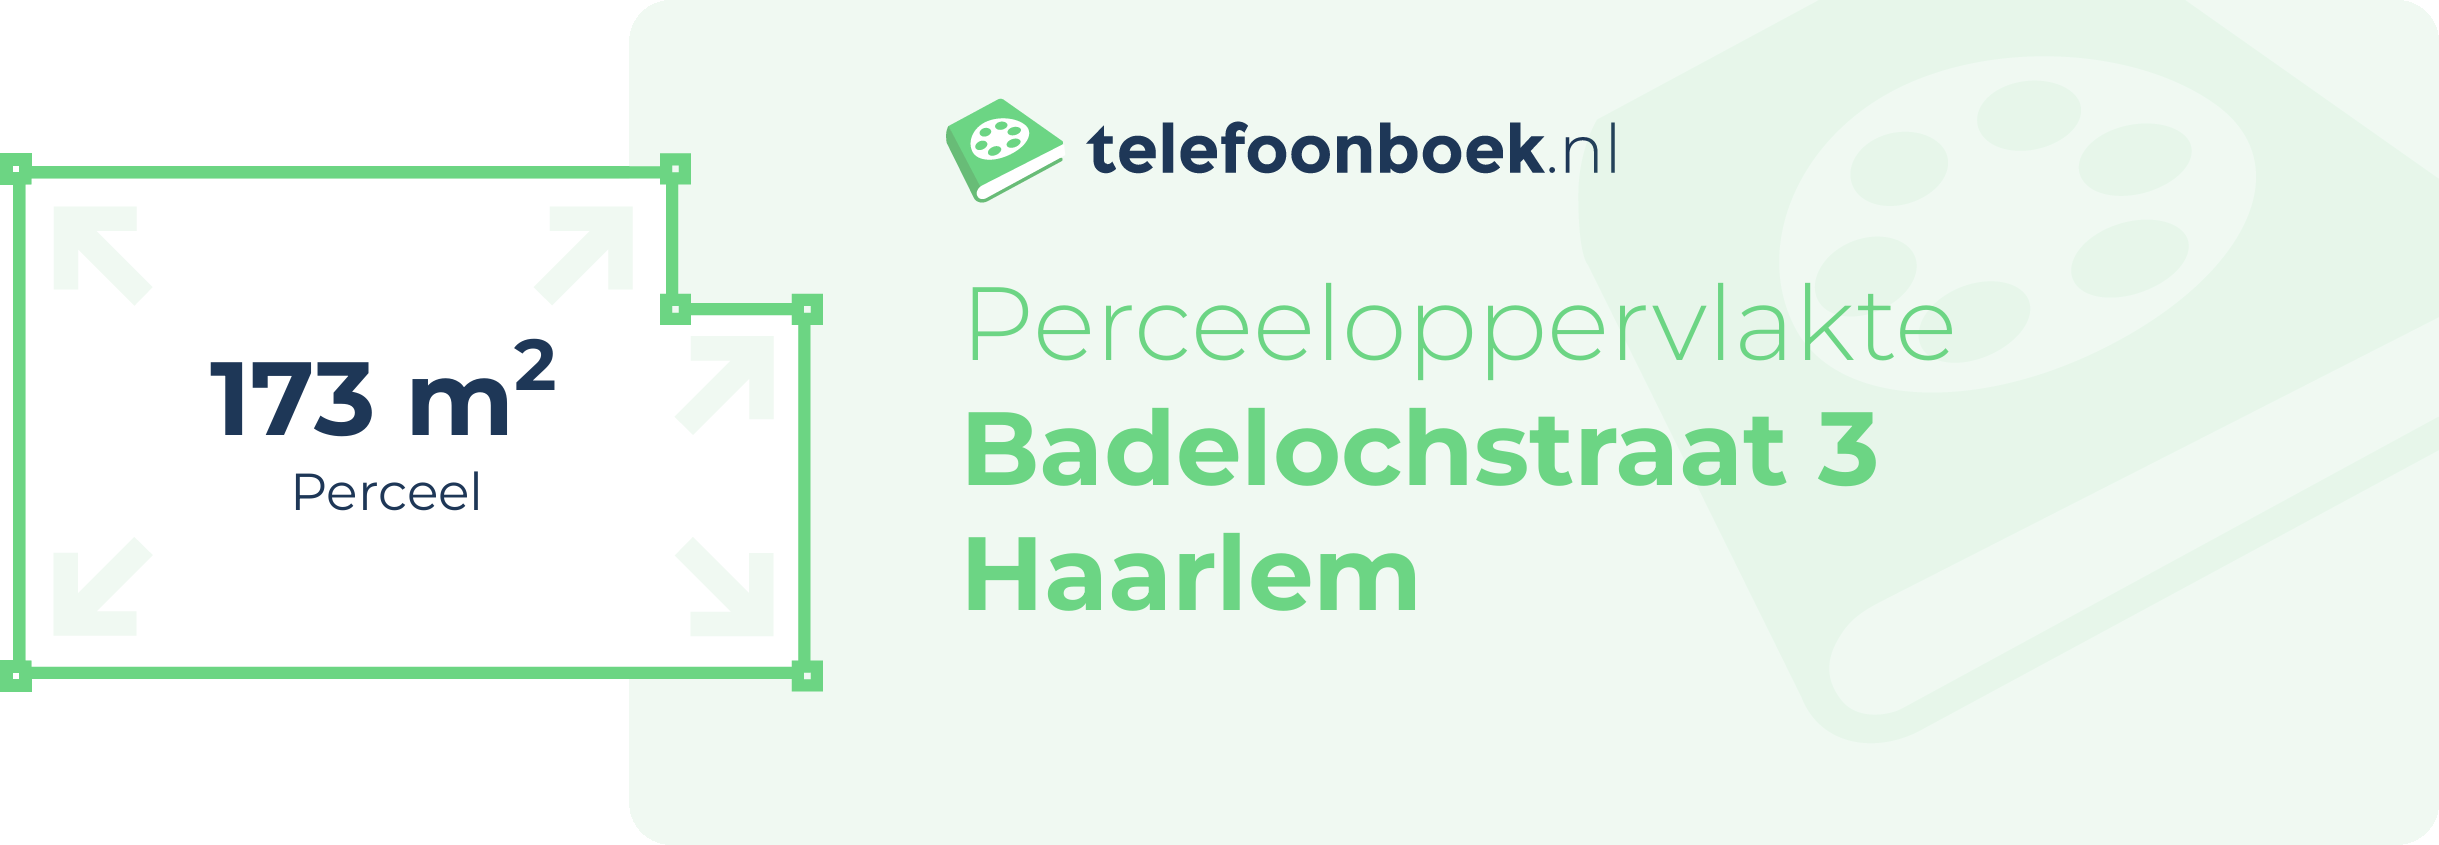 Perceeloppervlakte Badelochstraat 3 Haarlem